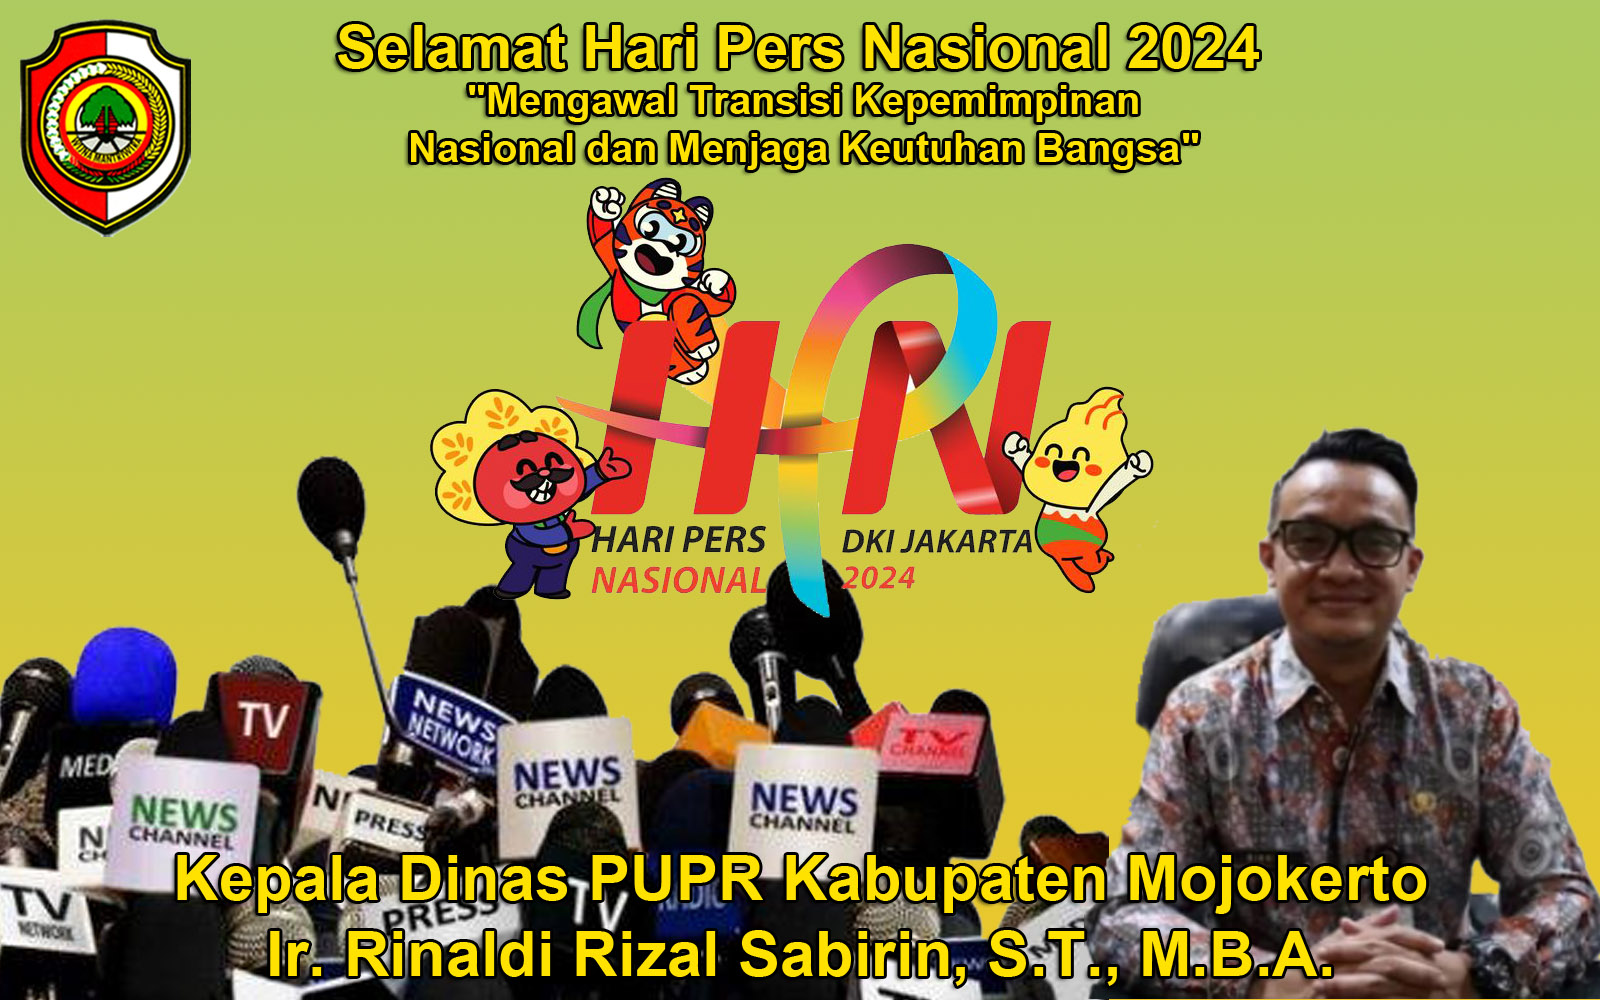 Kepala Dinas PUPR Kabupaten Mojokerto Ir. Rinaldi Rizal Sabirin, S.T., M.B.A. Mengucapkan Selamat Hari Pers Nasional 2024